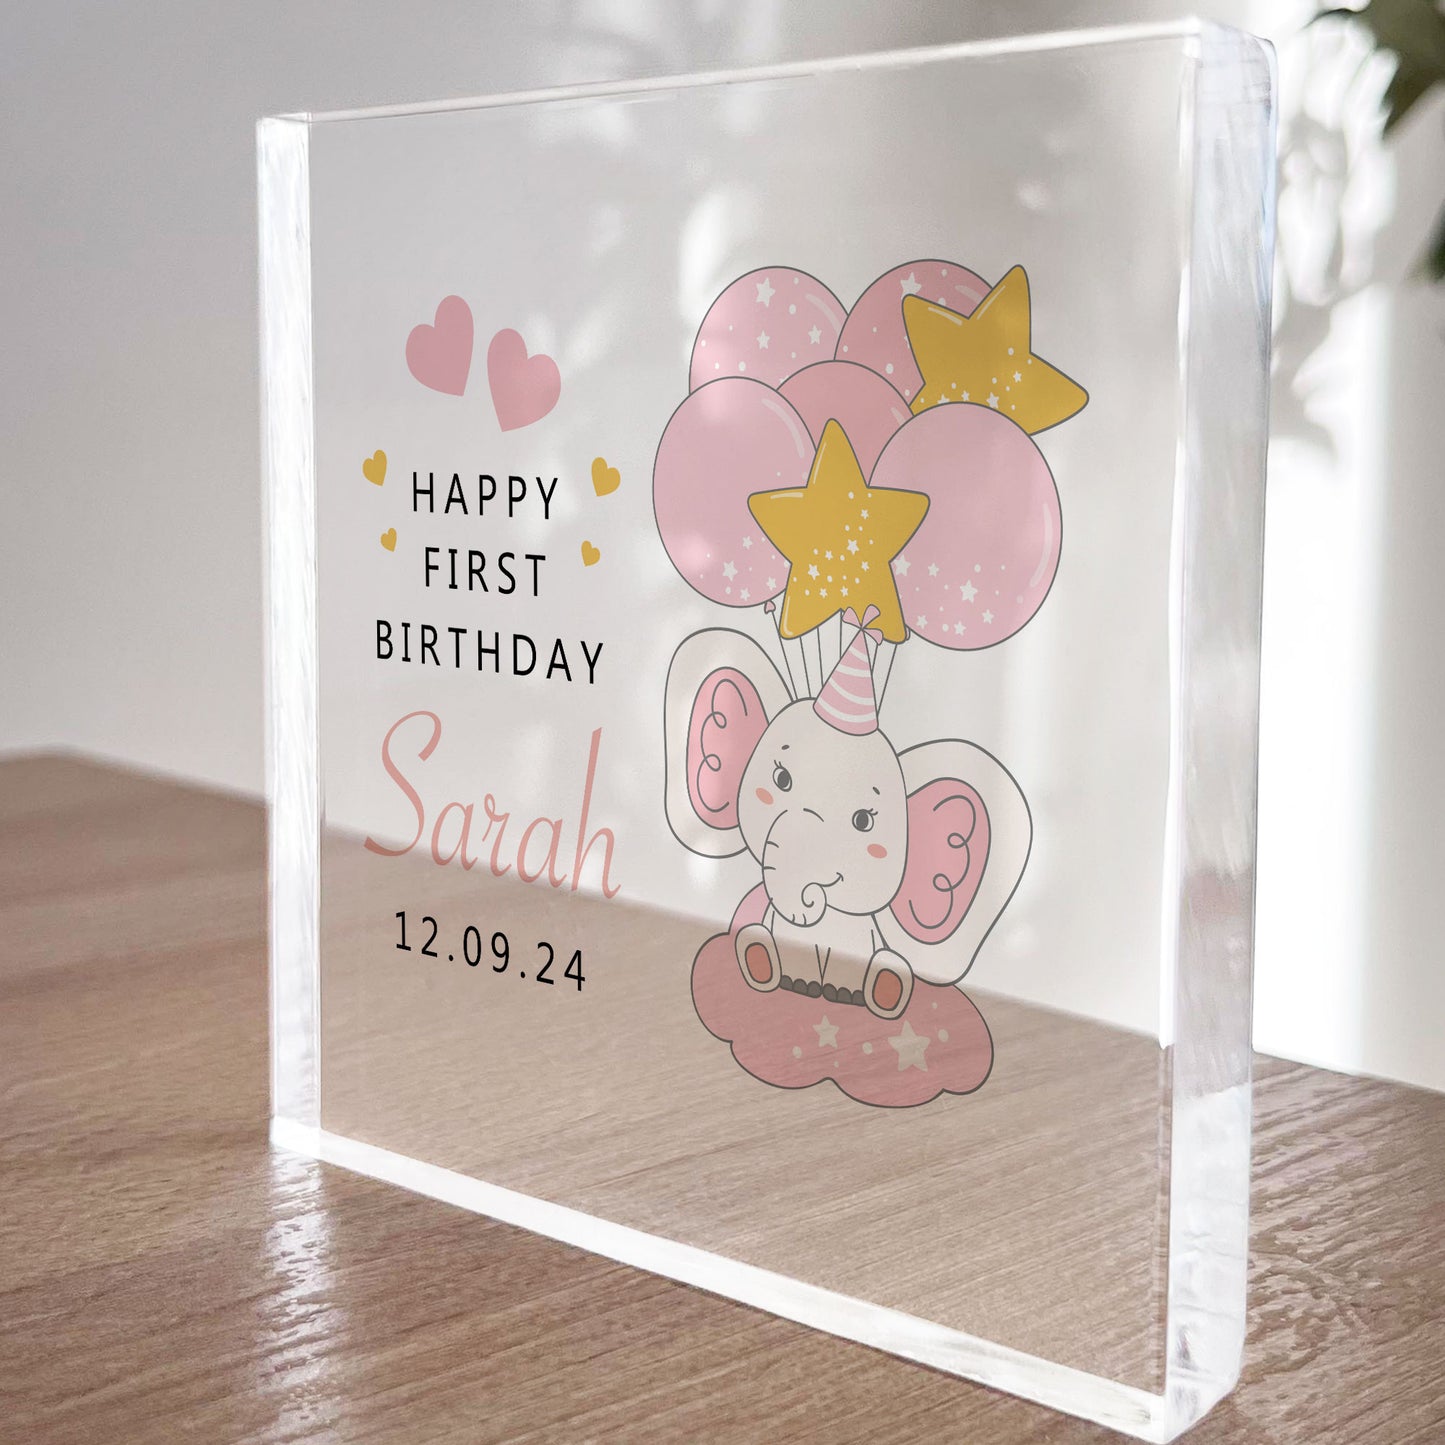 Personalised 1st Birthday Gift For Baby Boy Girl Acrylic Block